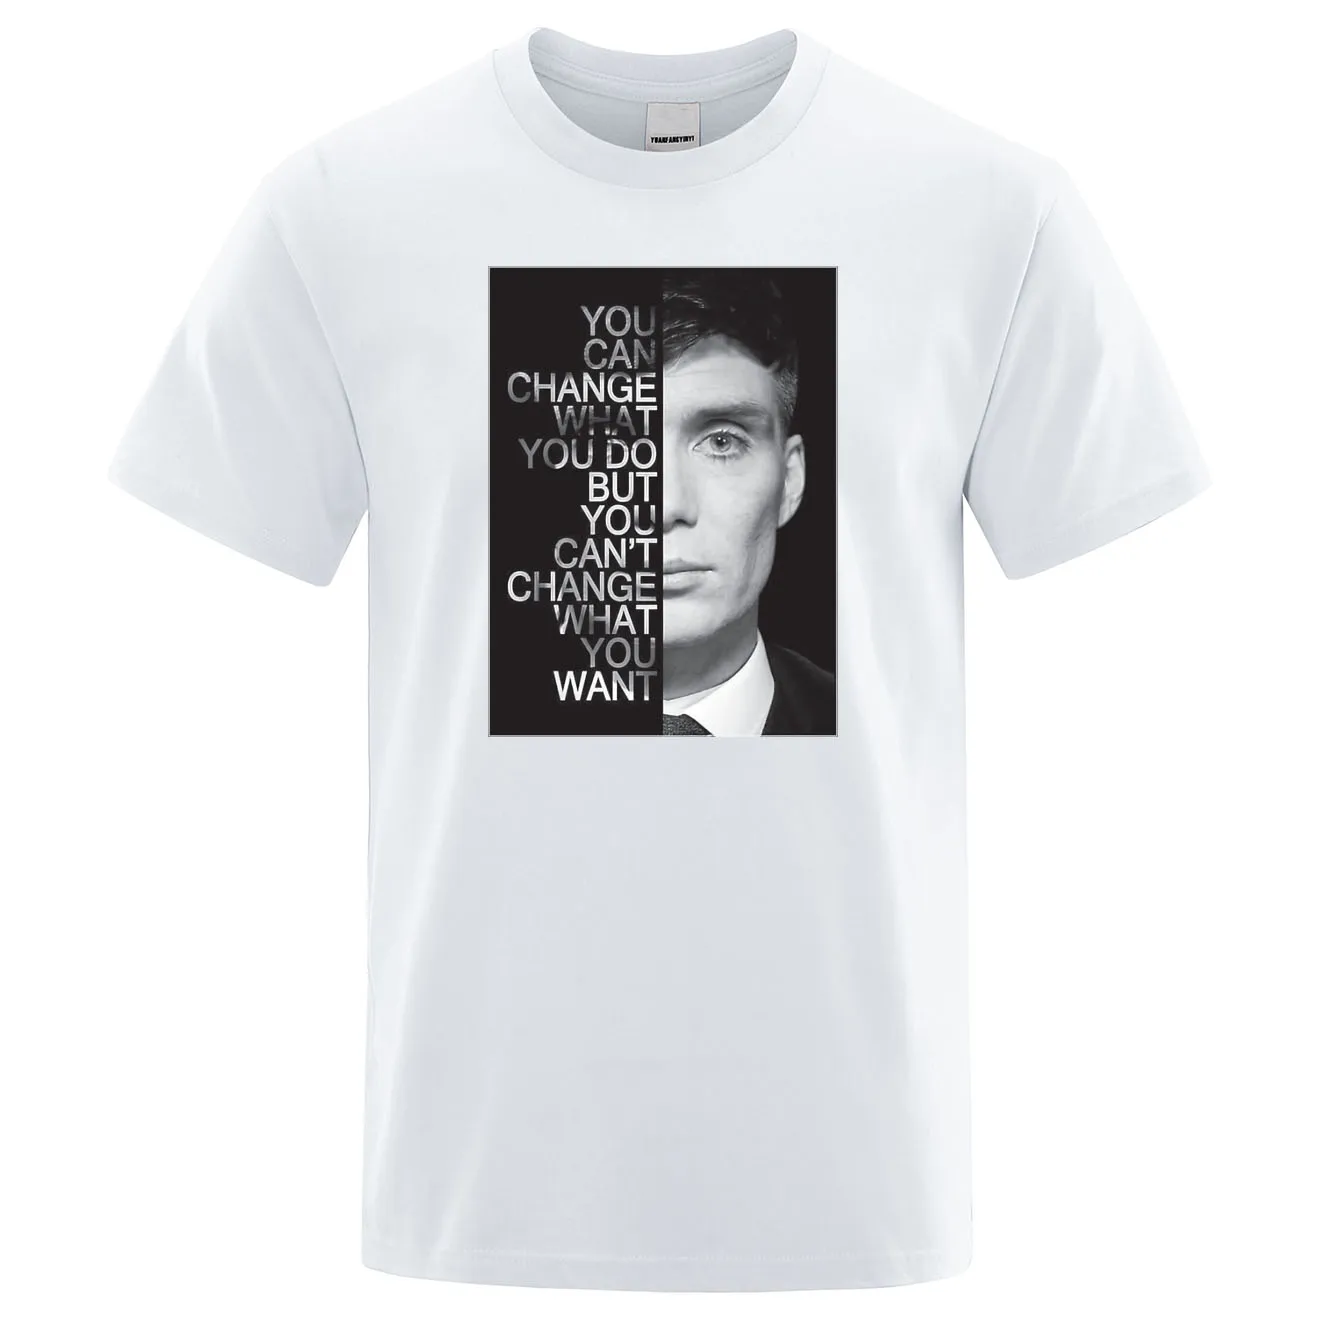 Г. Летняя футболка мужская футболка с короткими рукавами и принтом «Peaky blinds tv Show» семейная уличная одежда в стиле «хип-хоп», мужские футболки - Цвет: white 6